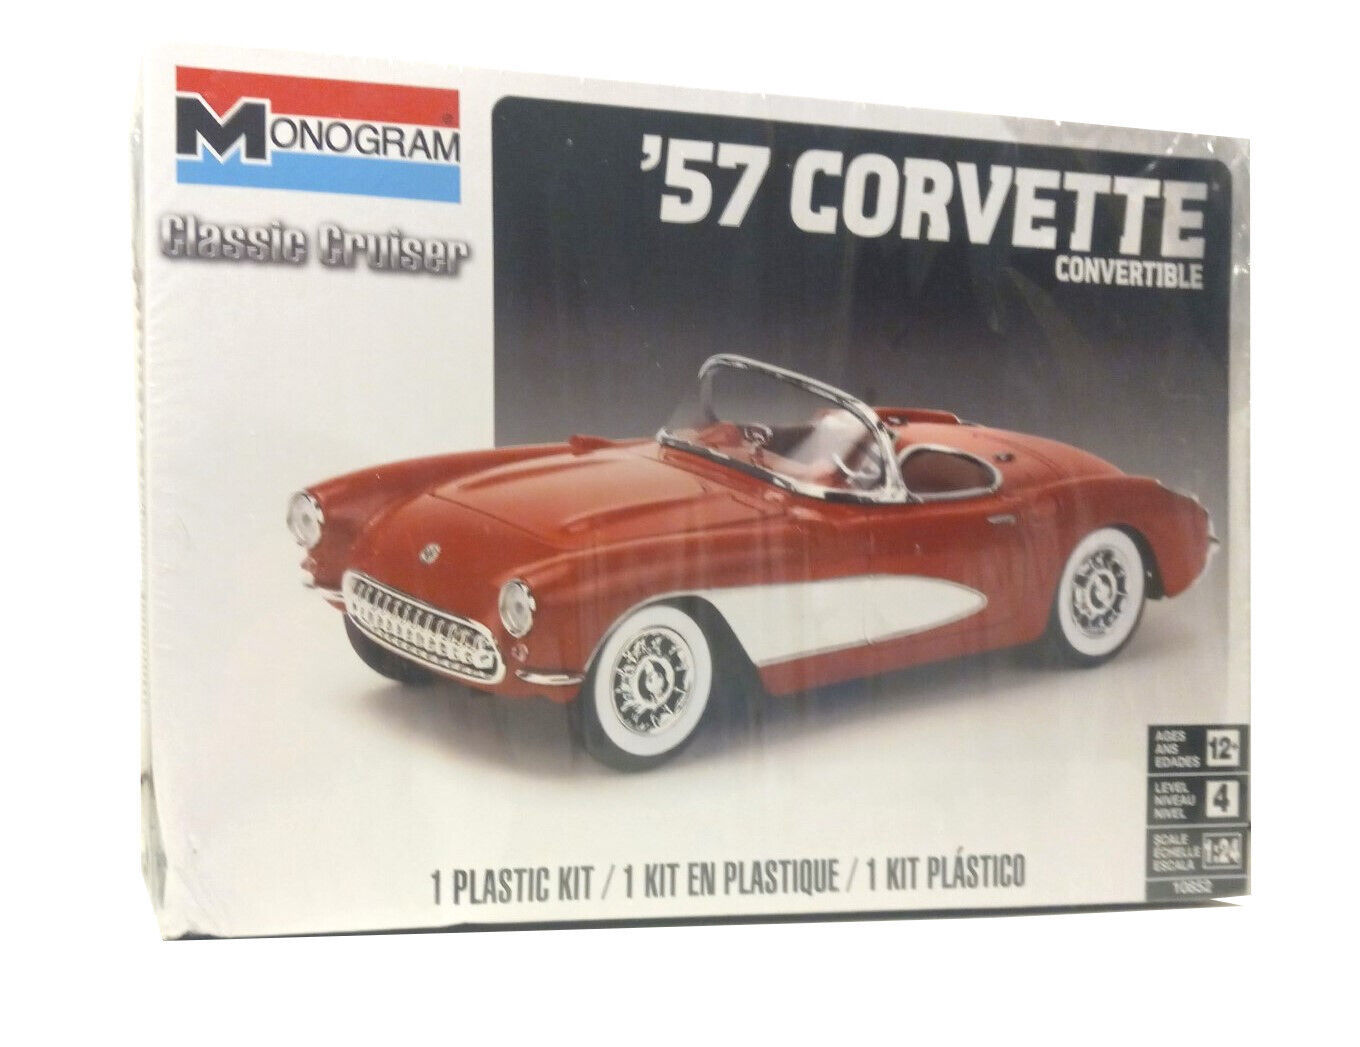 Monogram Classic Cruiser '57 Corvette 1:24 Scale Model Kit 10852 New in Box - $29.88